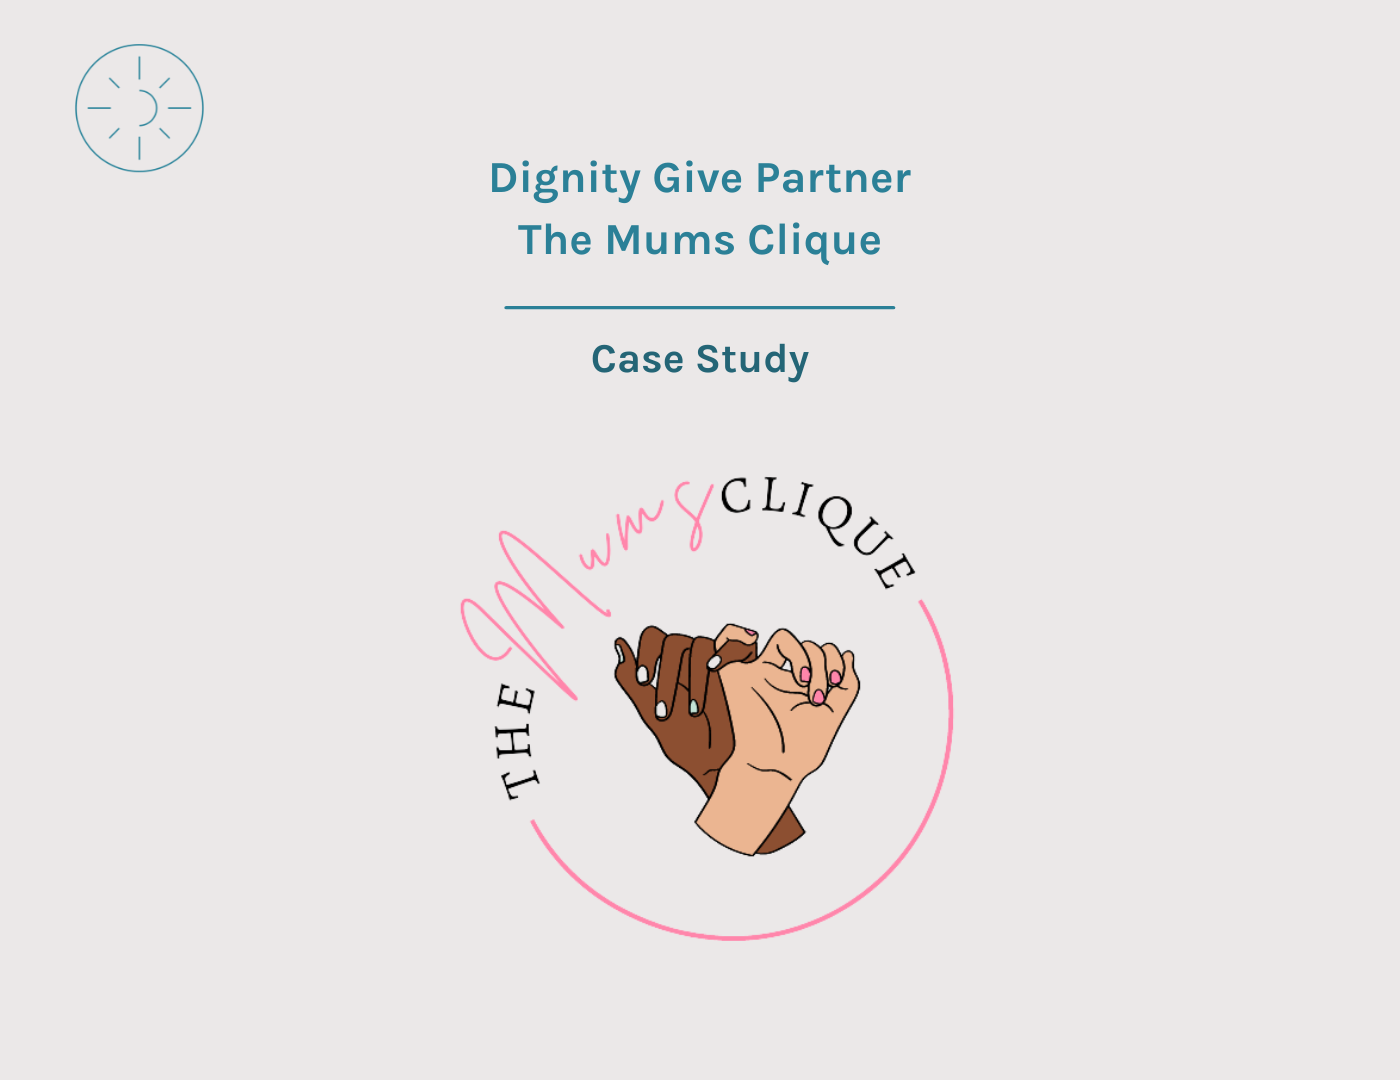 Give Partner case study: The Mums Clique